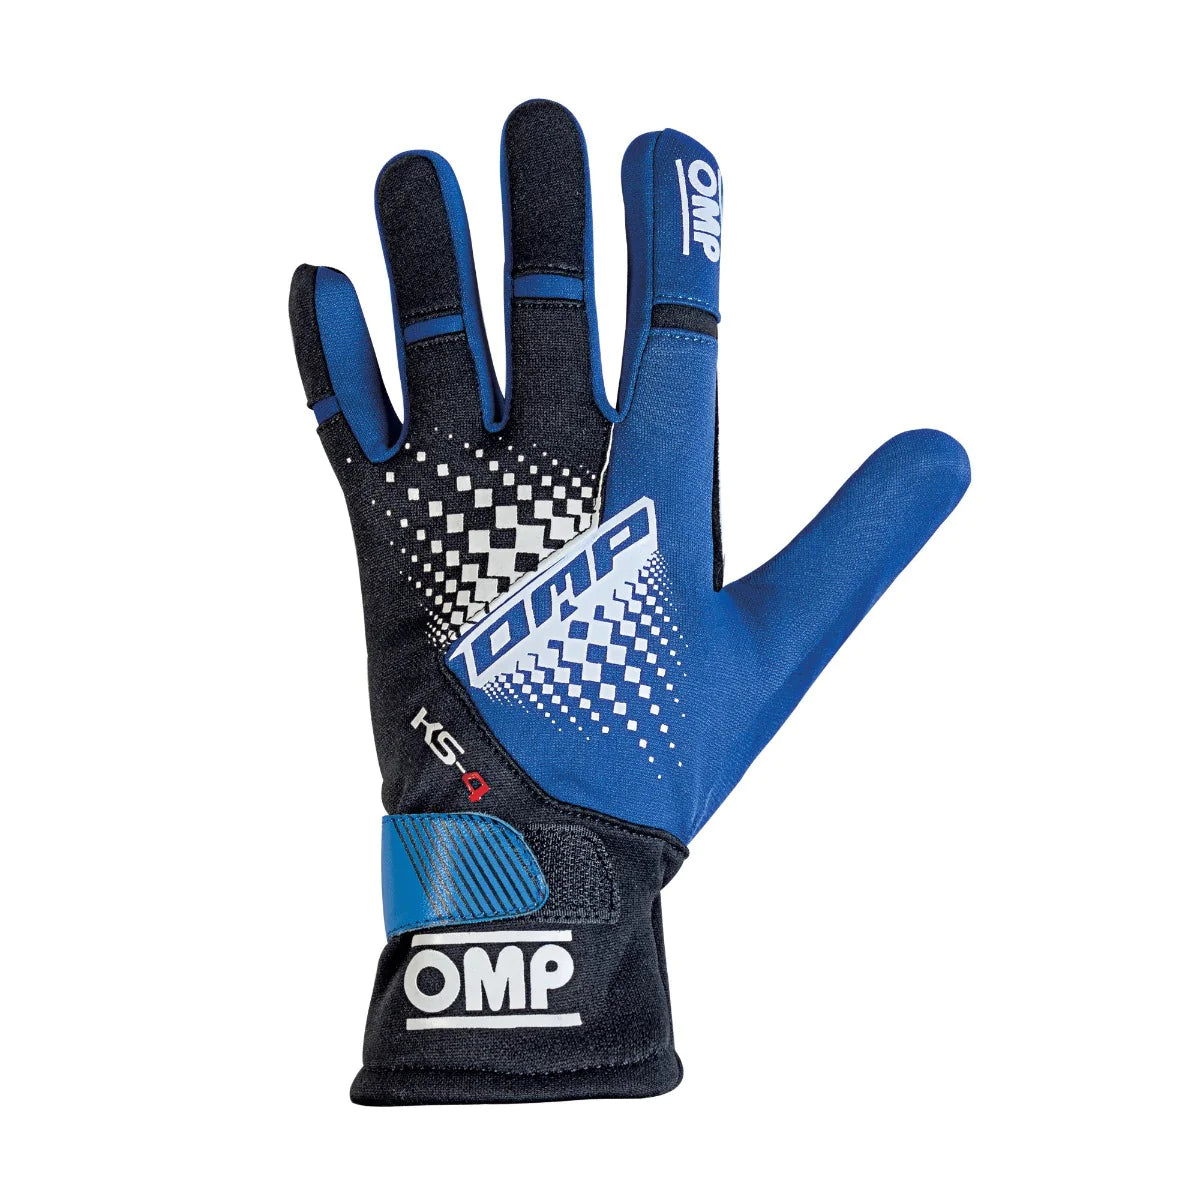 OMP KS-4 Kart Racing Glove